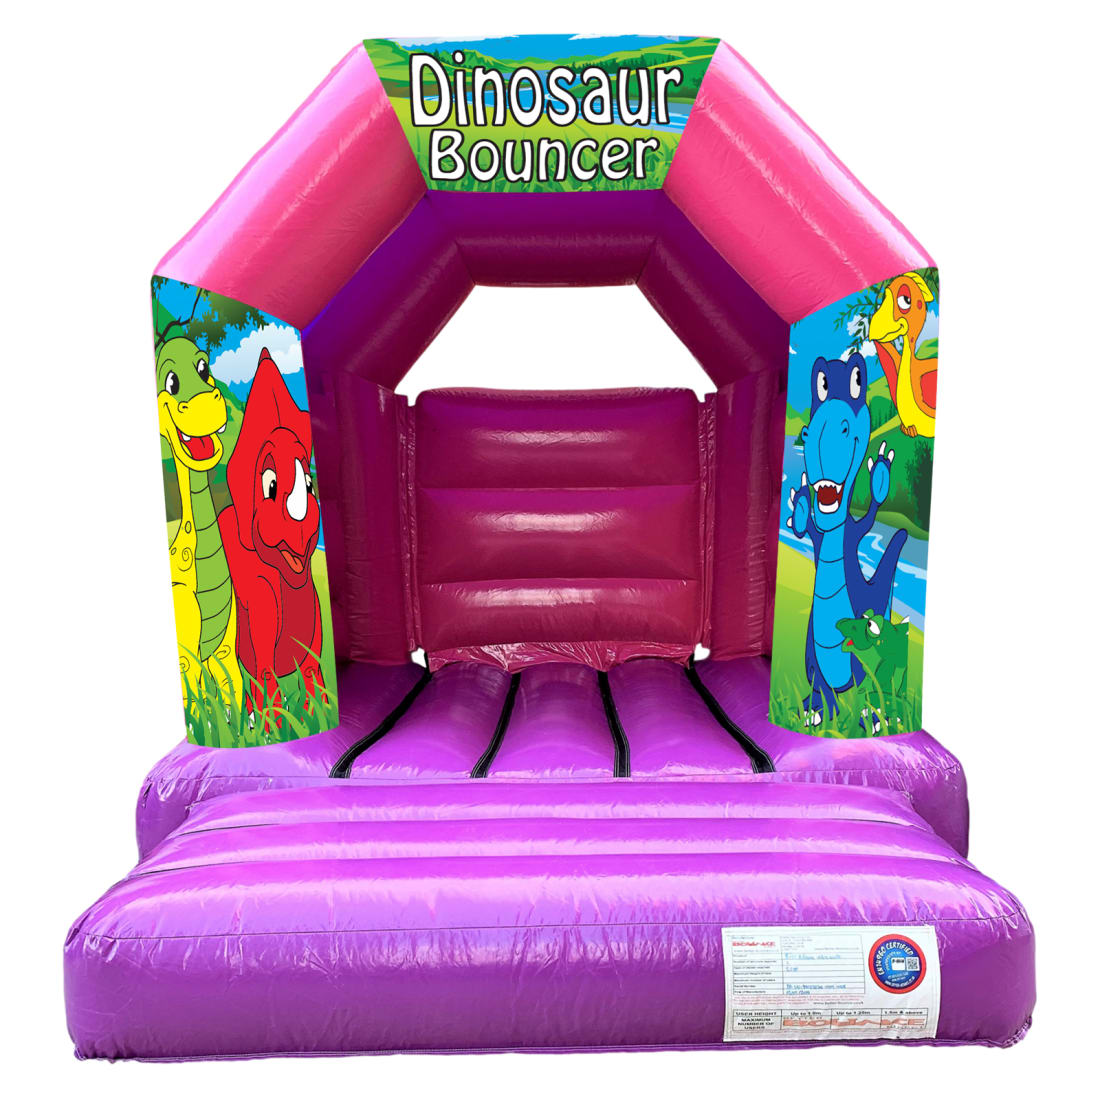 Dinosaur (Cartoon) Theme Toddler Bouncy Castle - Pink & Purple - Bouncy  Castle Hire & Event Entertainments in Leeds, Wakefield, Bradford,  Huddersfield, Halifax, York, Sheffield & Nationwide